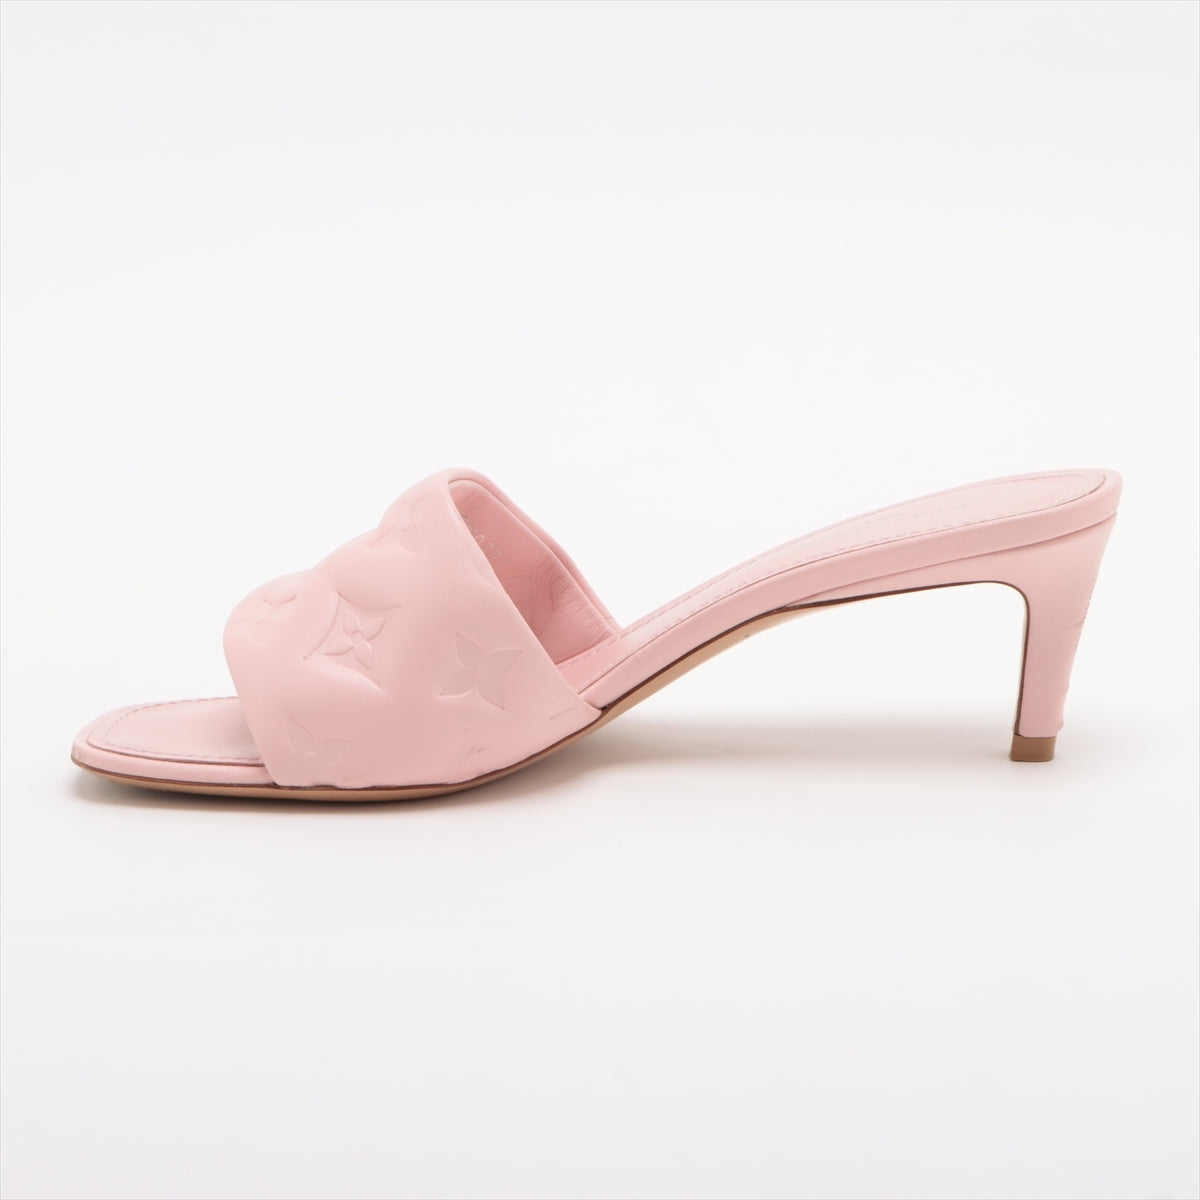 Louis Vuitton revival line 21 years Leather Sandals 36 1/2 Ladies' Pink SW0291 Monogram embossed